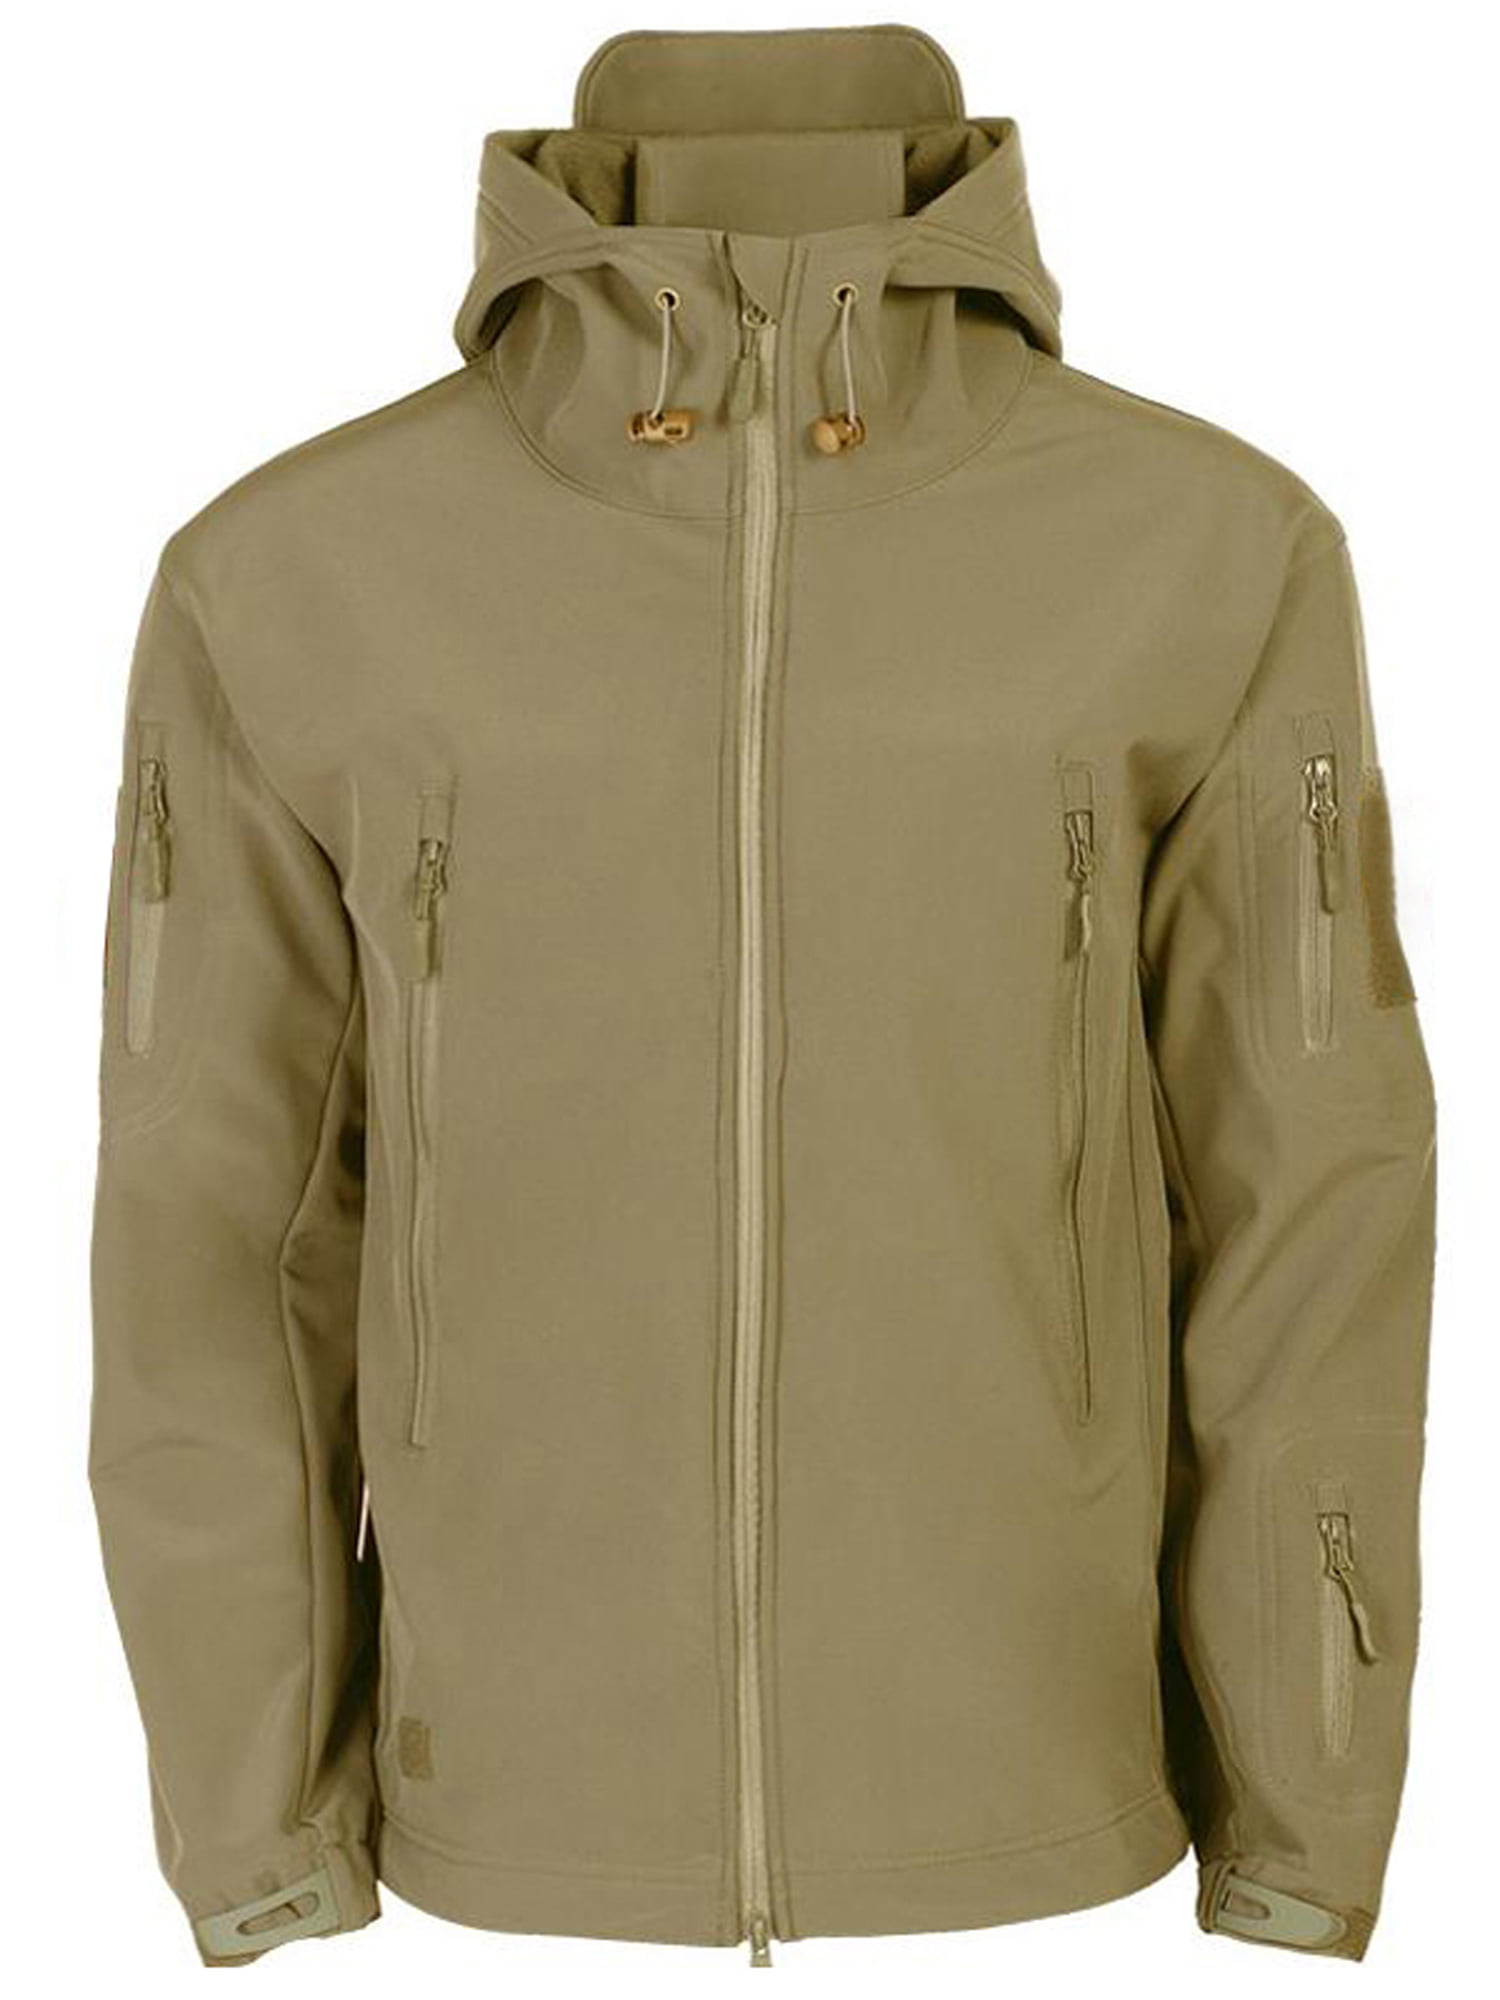 Details about   Owney Mens Sports Outdoor Hooded Full Zip Jacket Waterproof Windproof Khaki 